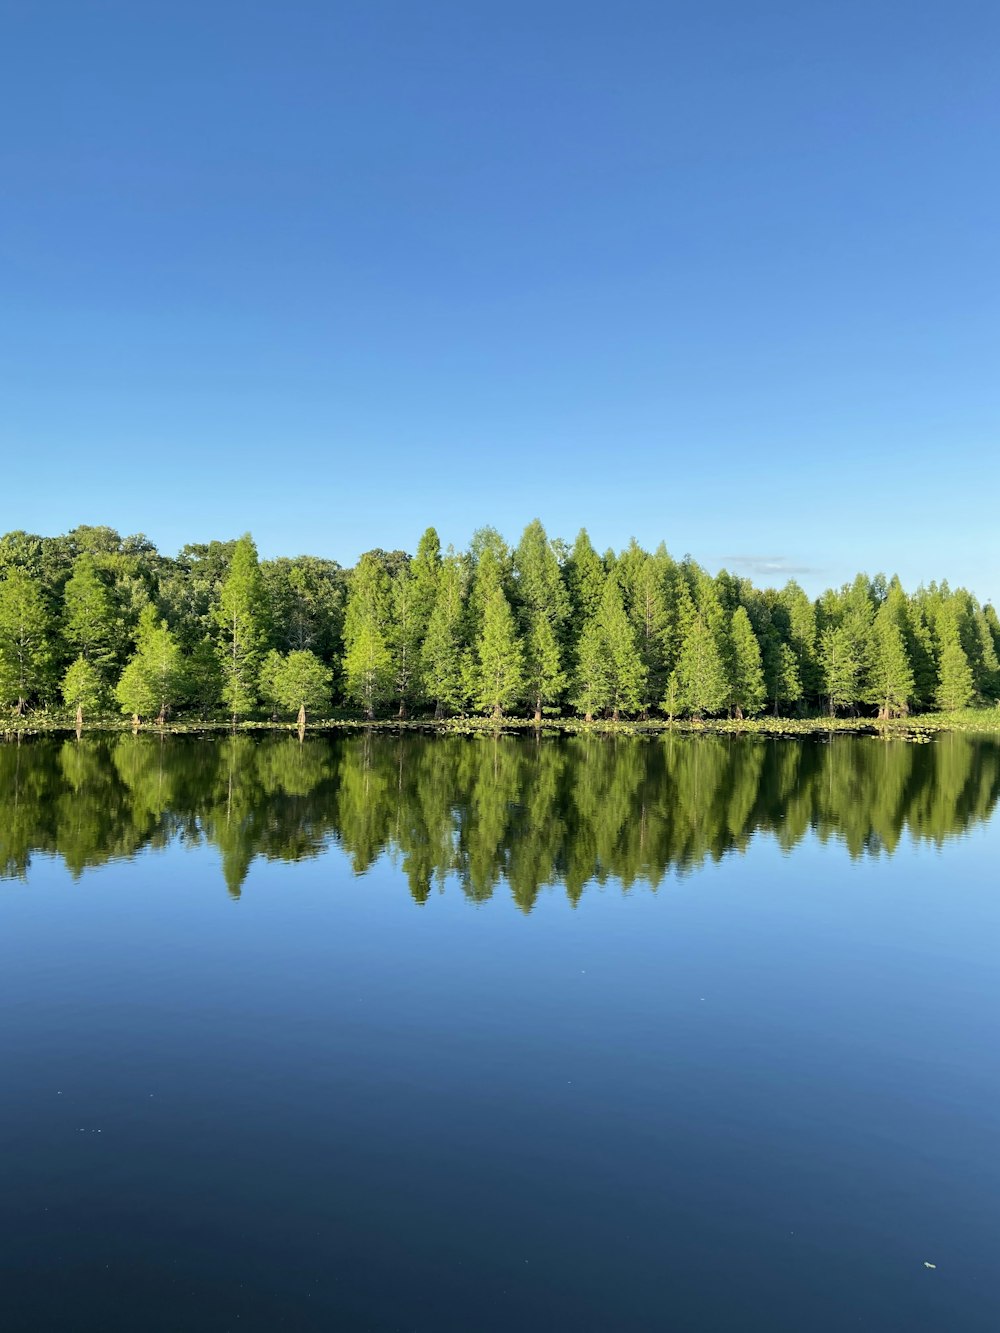 green trees beside lake under blue sky during daytime